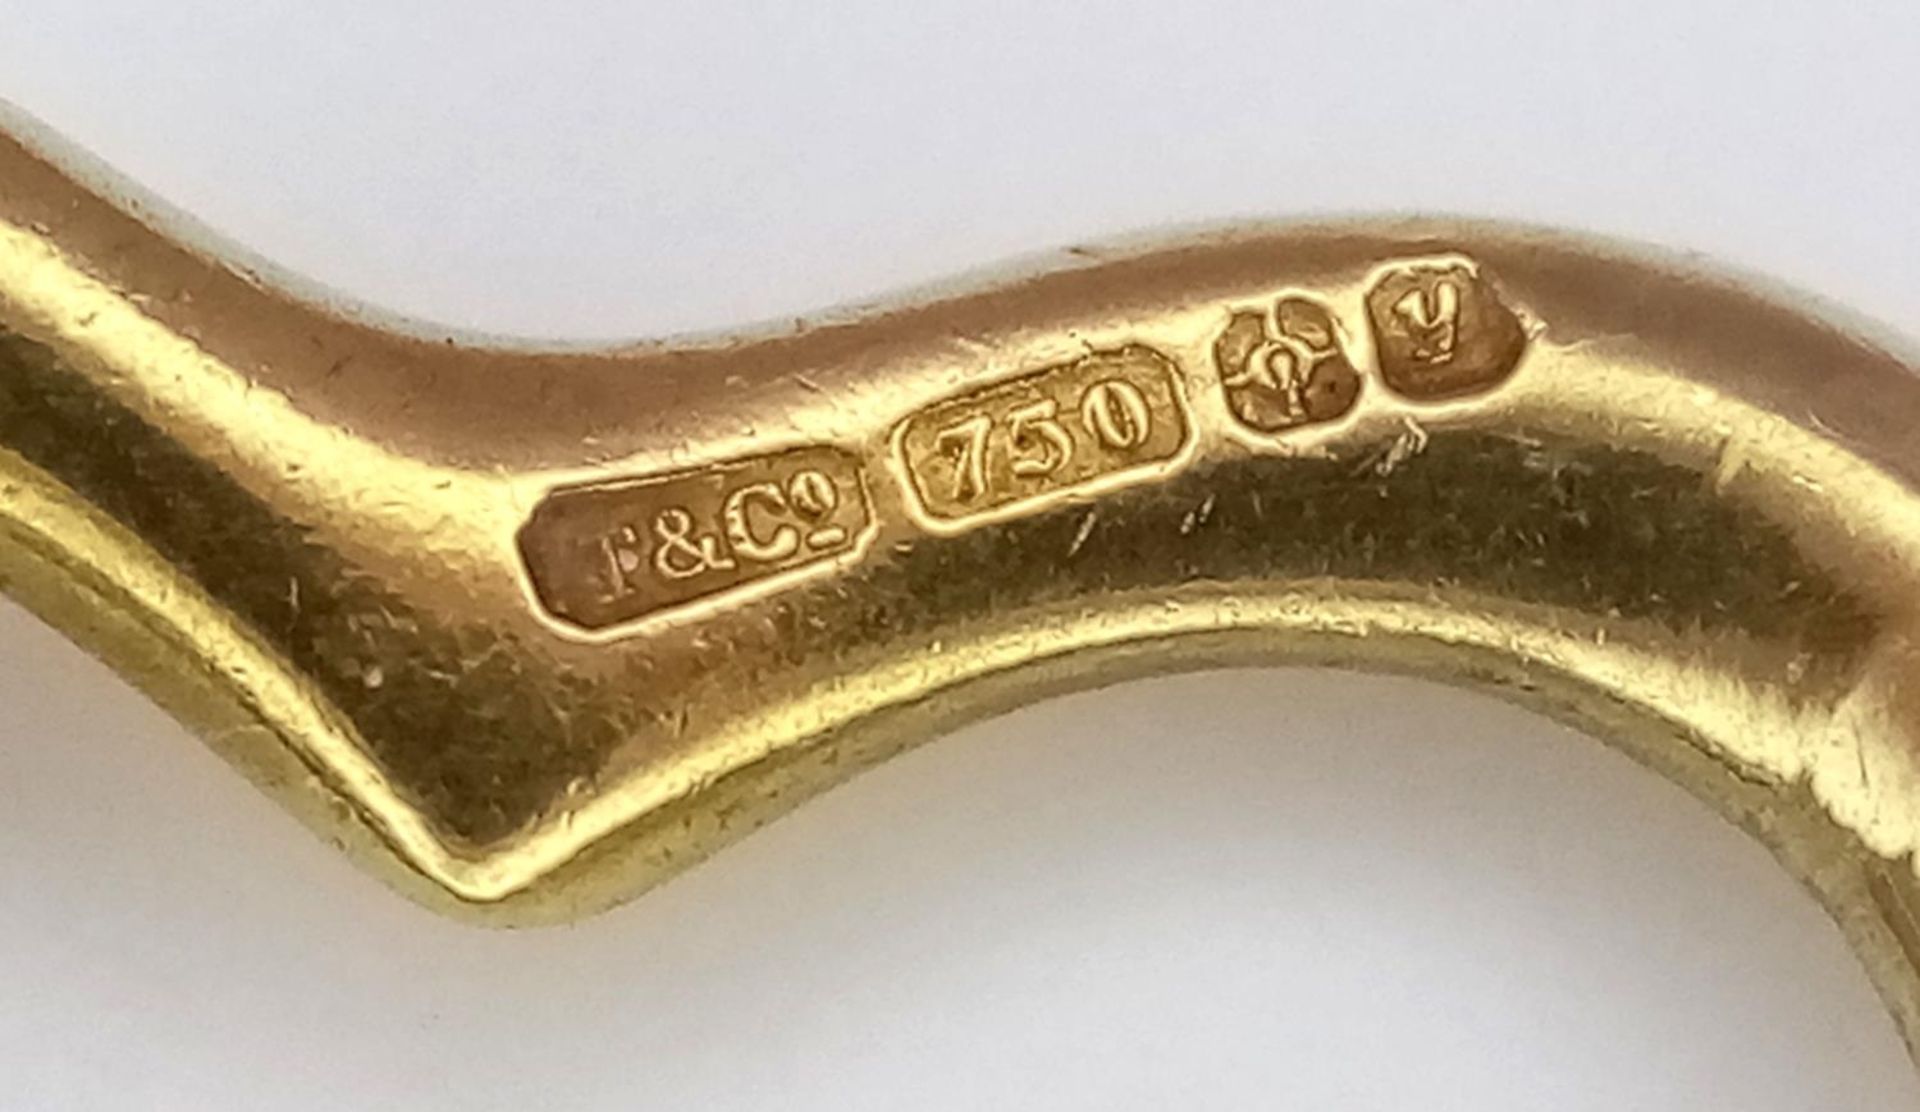 A Tiffany and Co. 18K Yellow Gold Heart Pendant. Tiffany markings. 15 x 15mm. 2g - Bild 3 aus 5